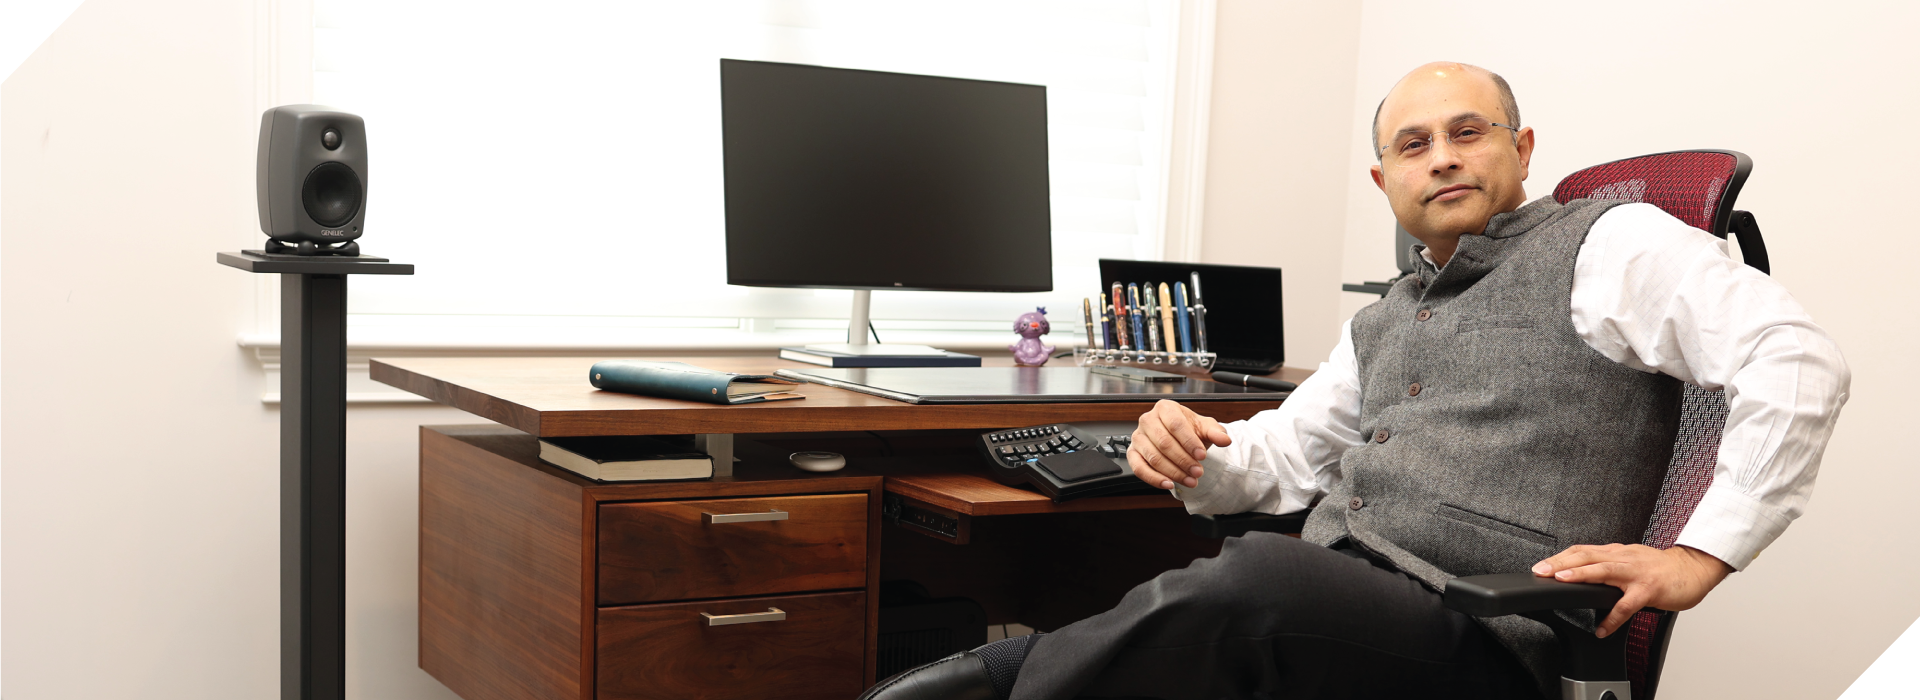 Registered & certified financial advisor Vikram Kaul working in his office.